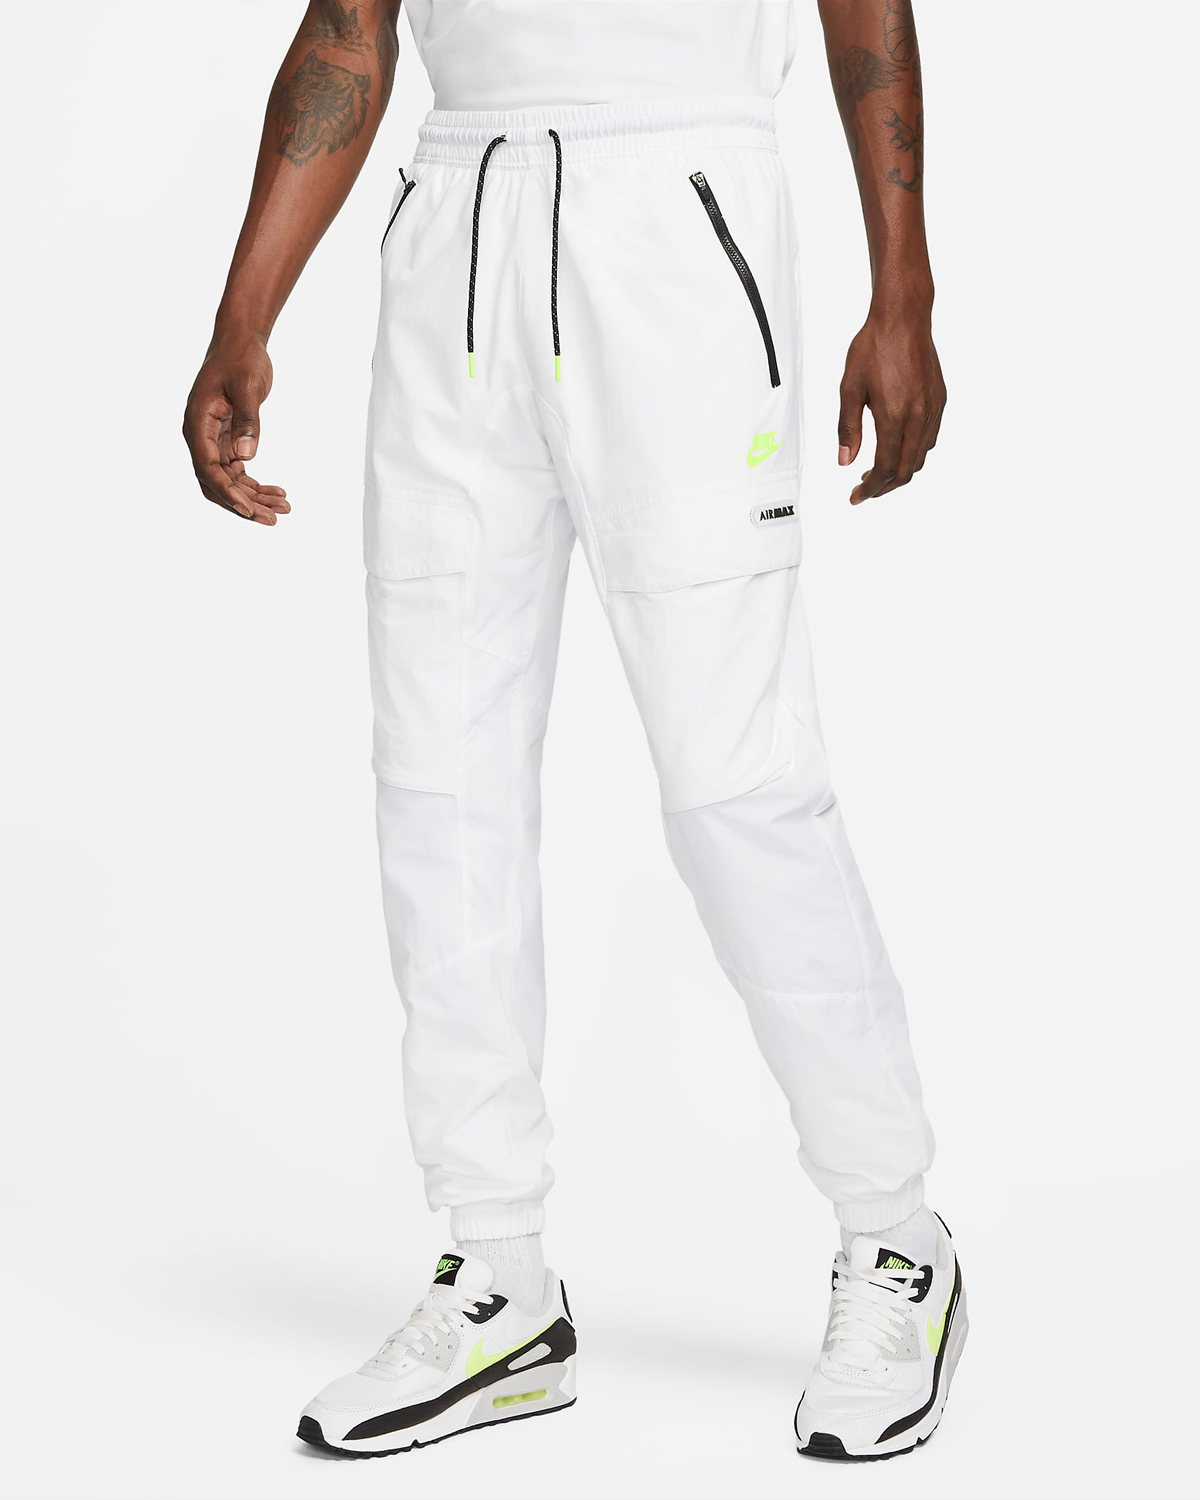 Nike-Sportswear-Air-Max-Woven-Cargo-Pants-White-Volt